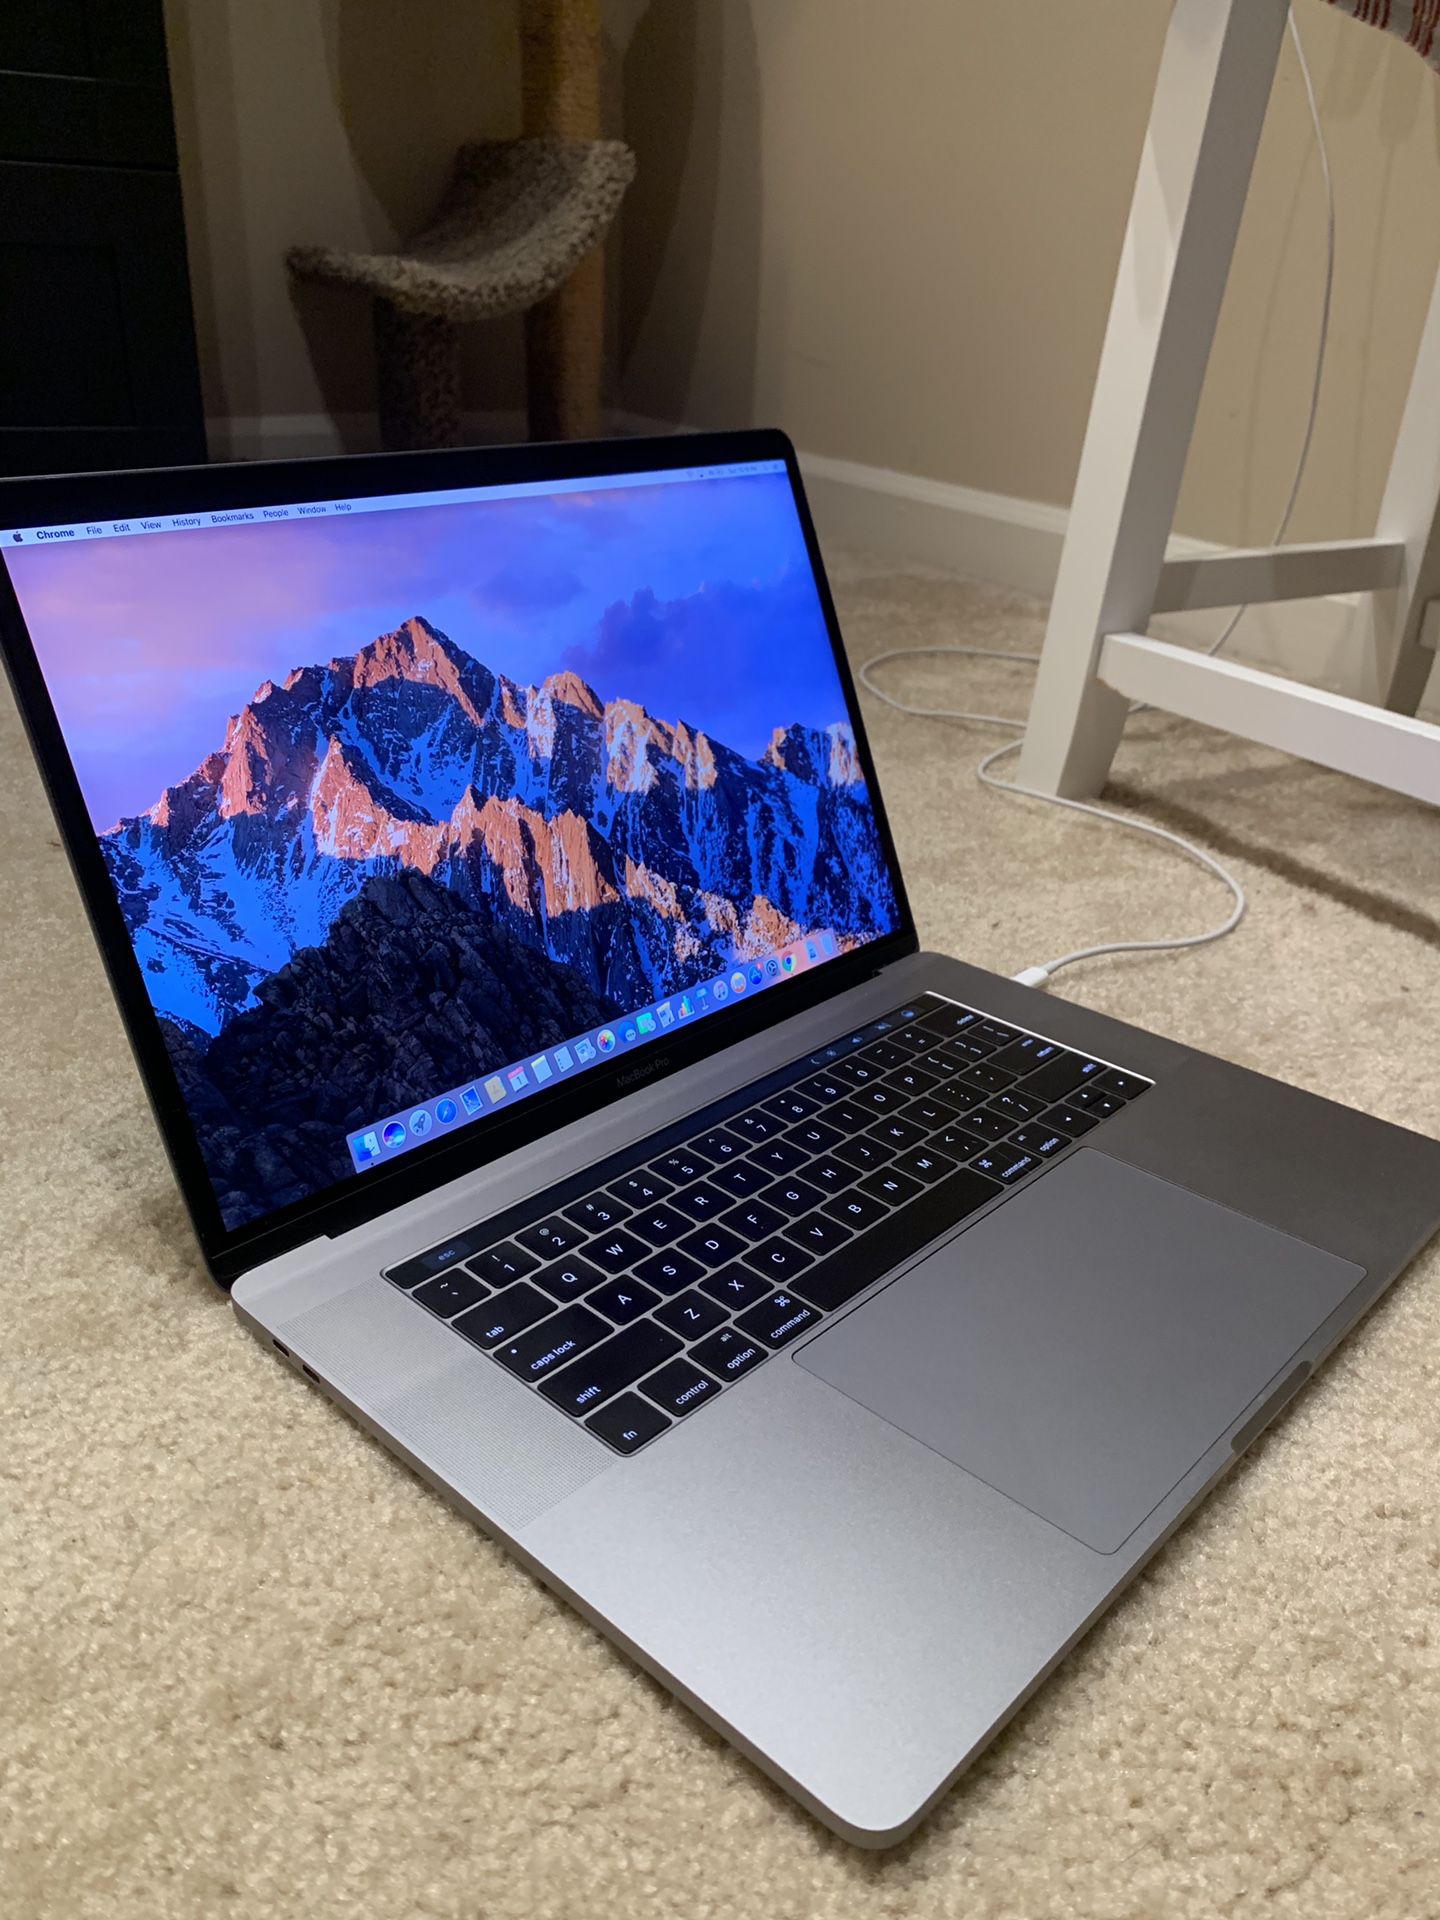 MacBook Pro - 15" Display - 256 GB SSD - Space Gray (2016, Touchbar)